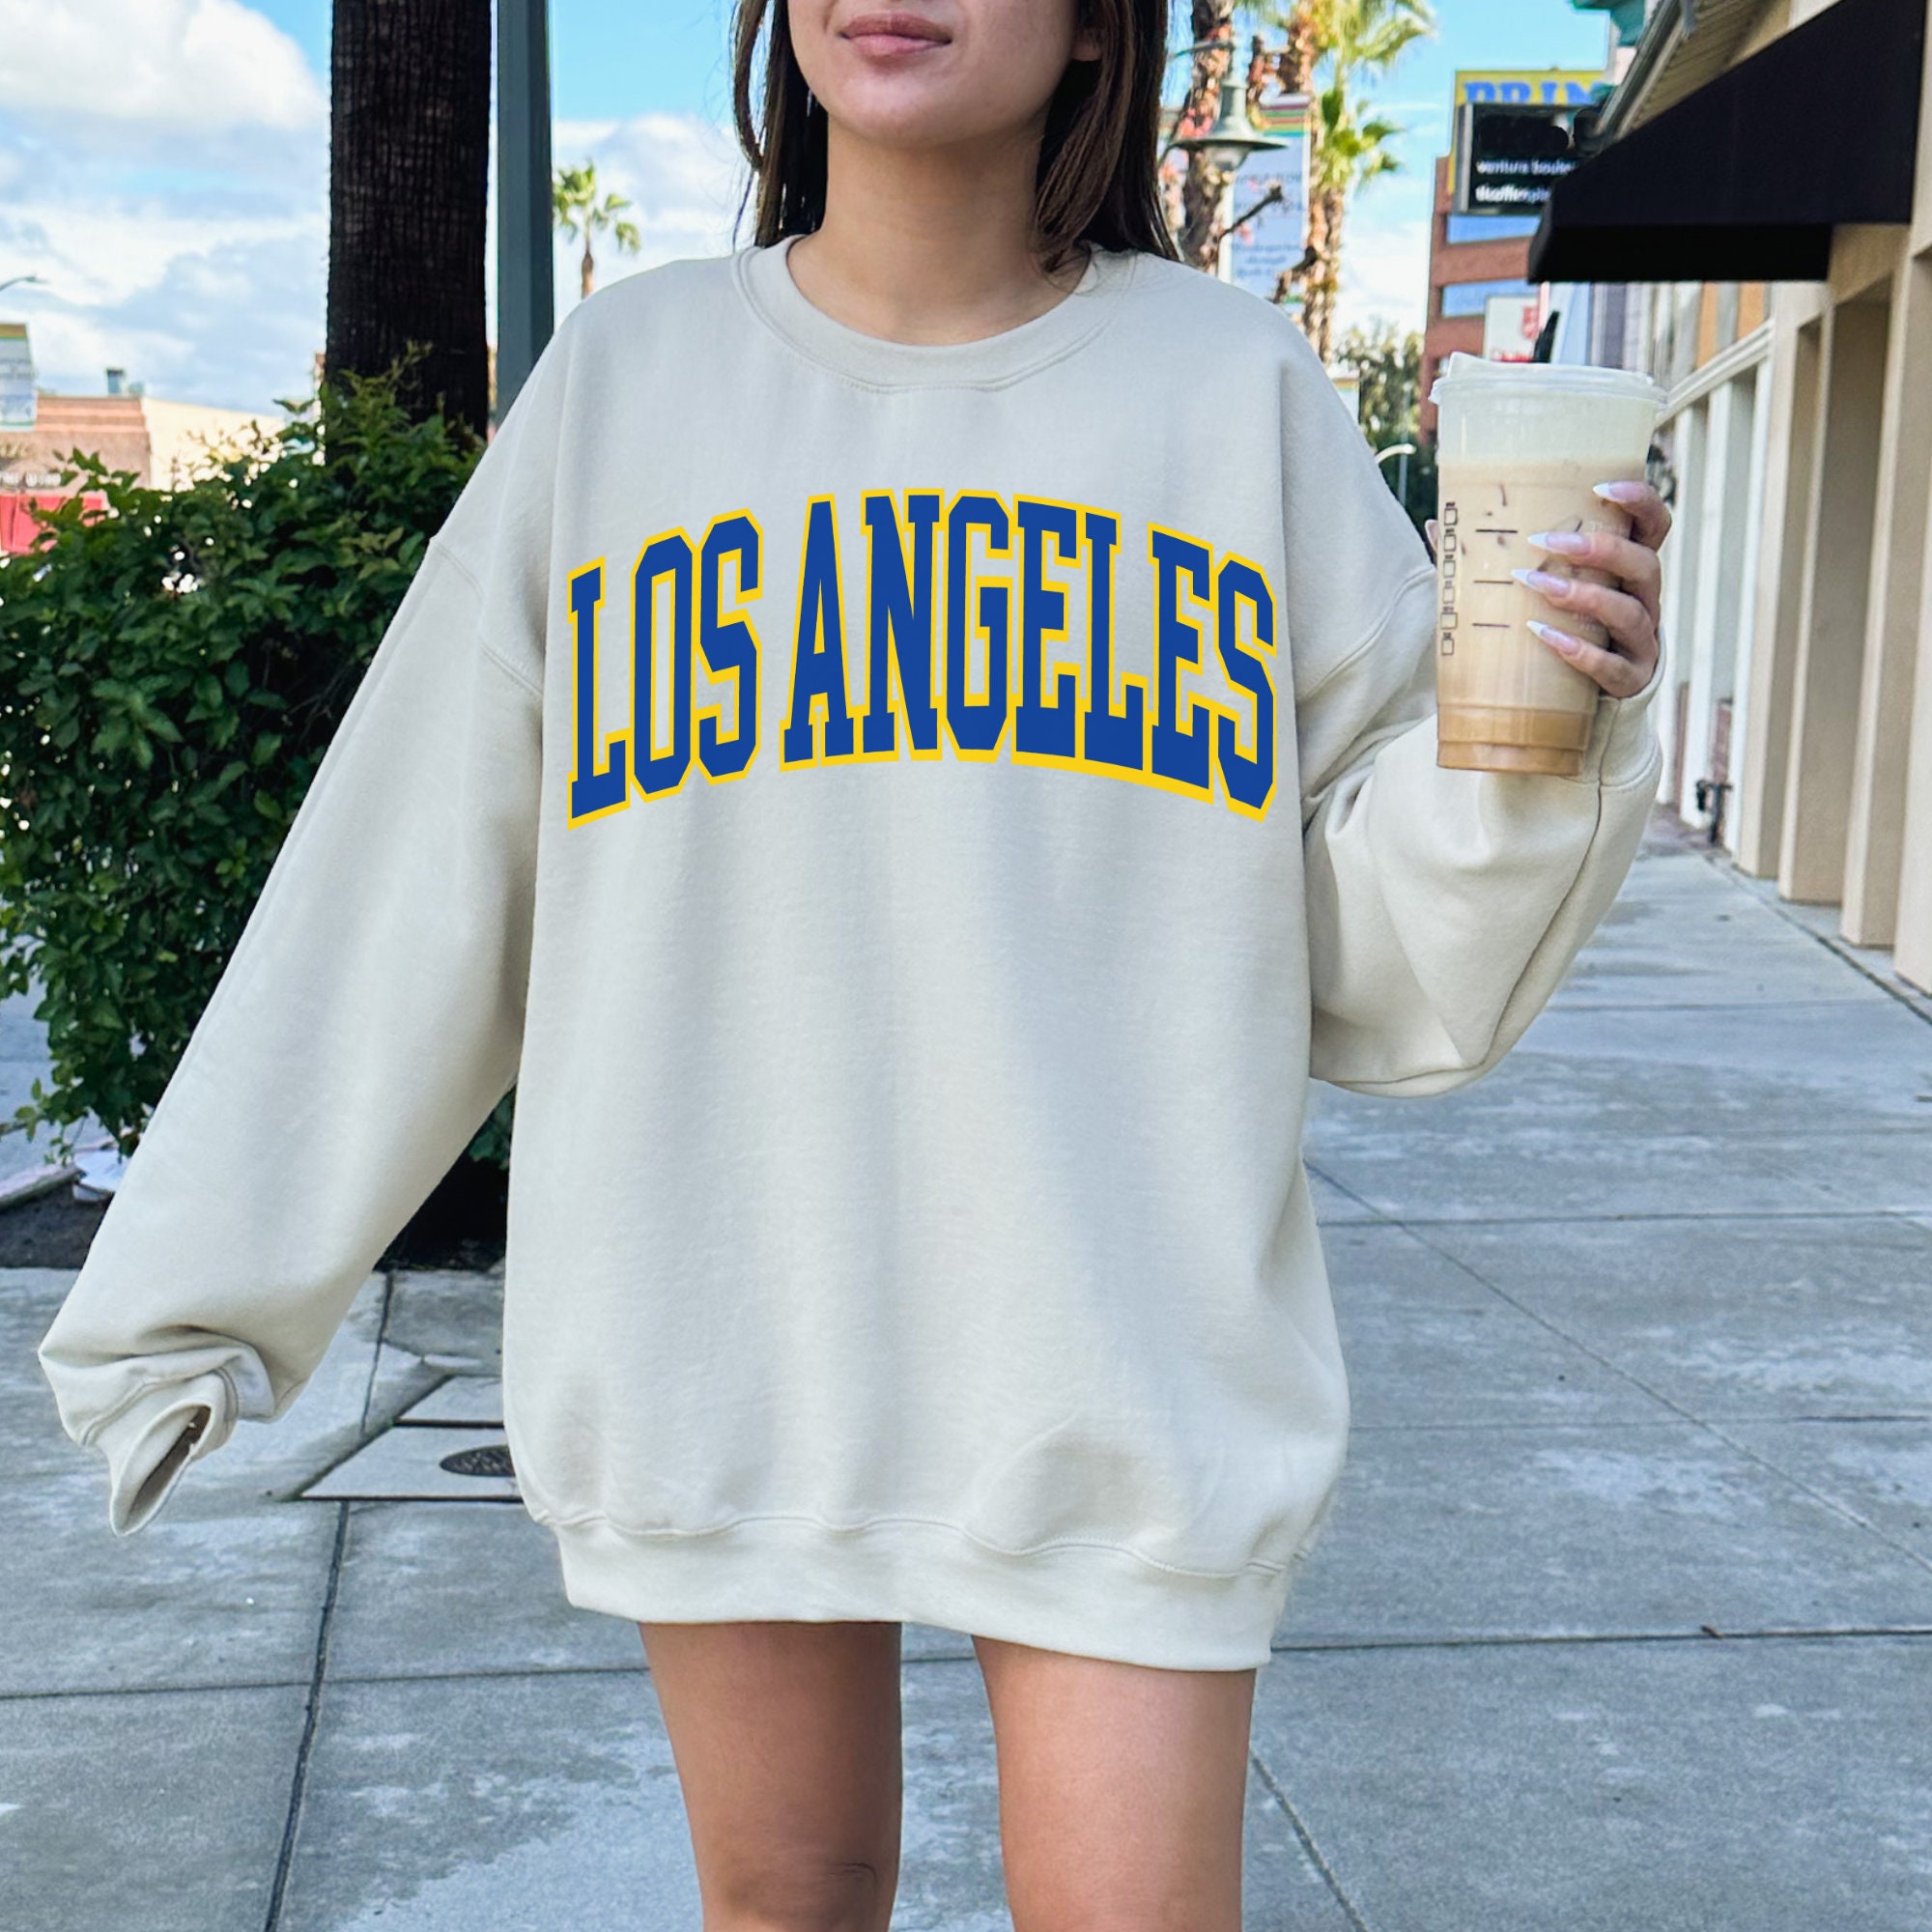 Los Angeles Rams T Shirt, Los Angeles Rams Vintage Logo Tee